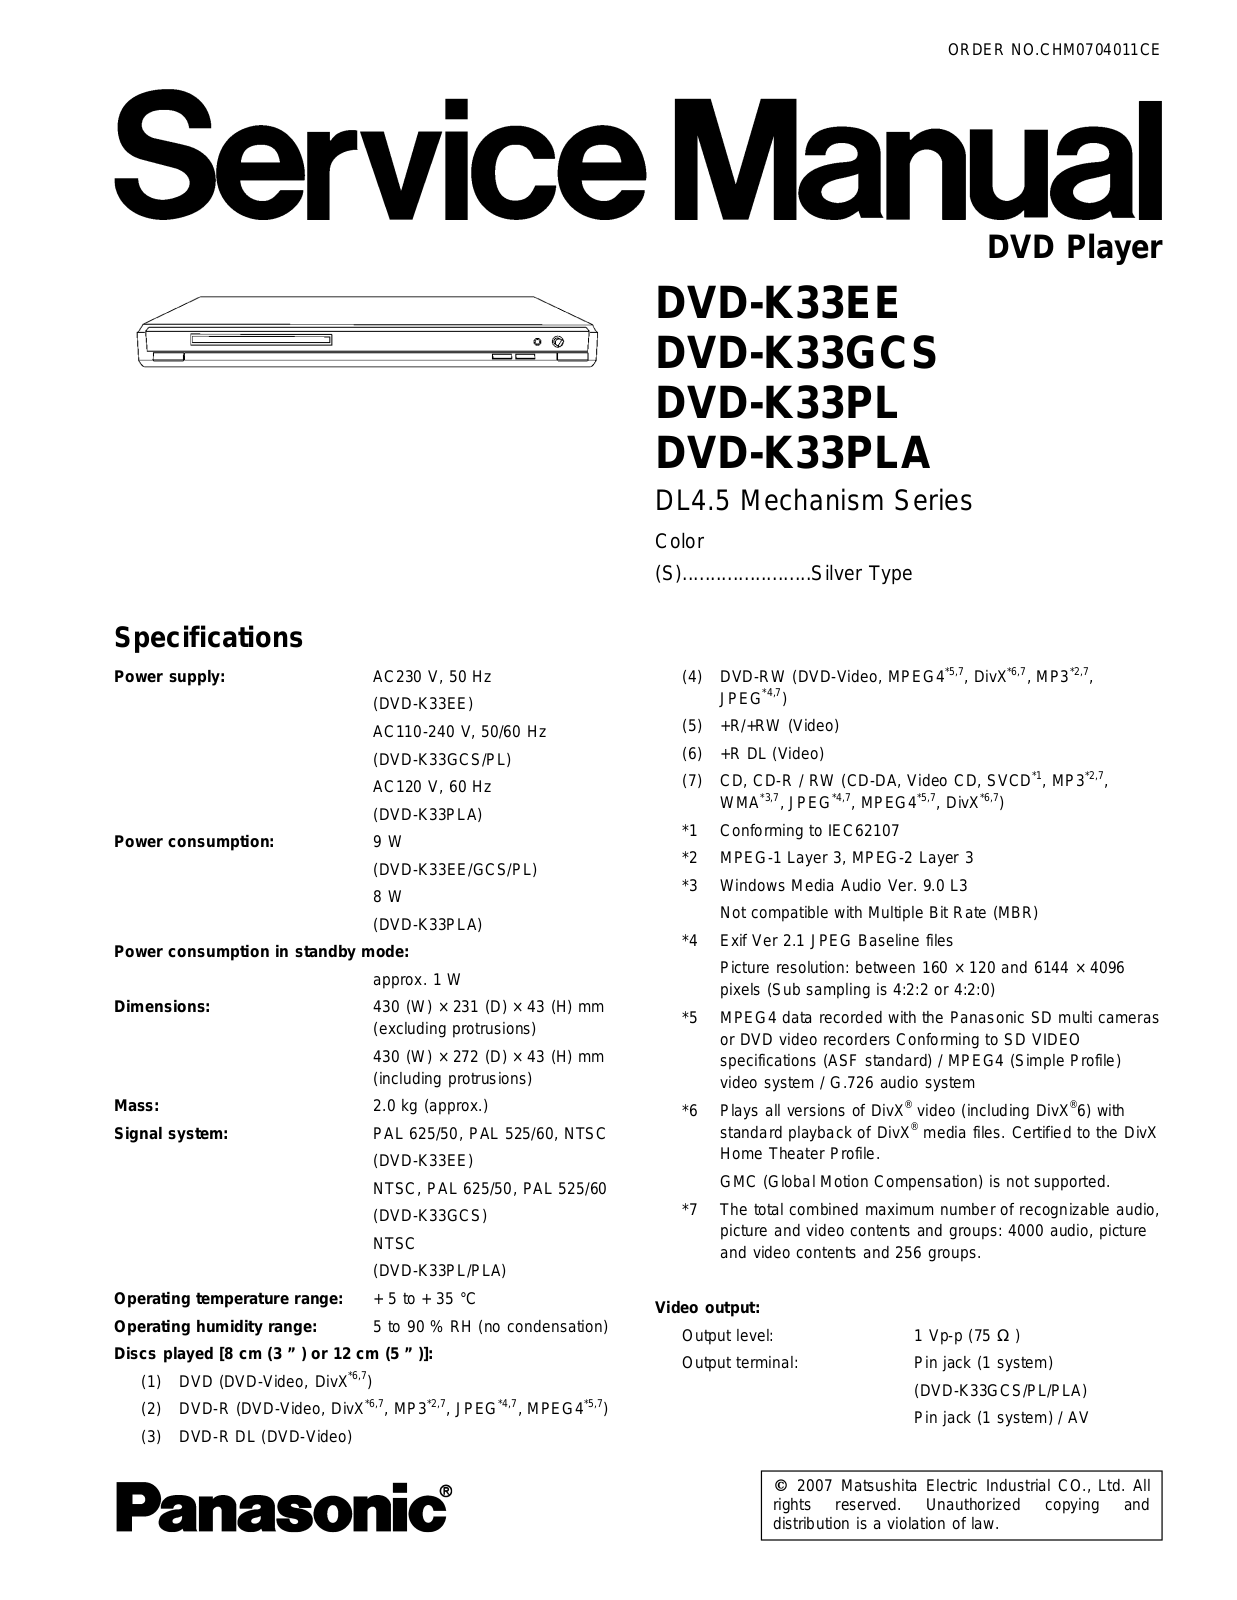 panasonic DVD-K33EE, DVD-K33GCS, DVD-K33PL, DVD-K33PLA Service Manual